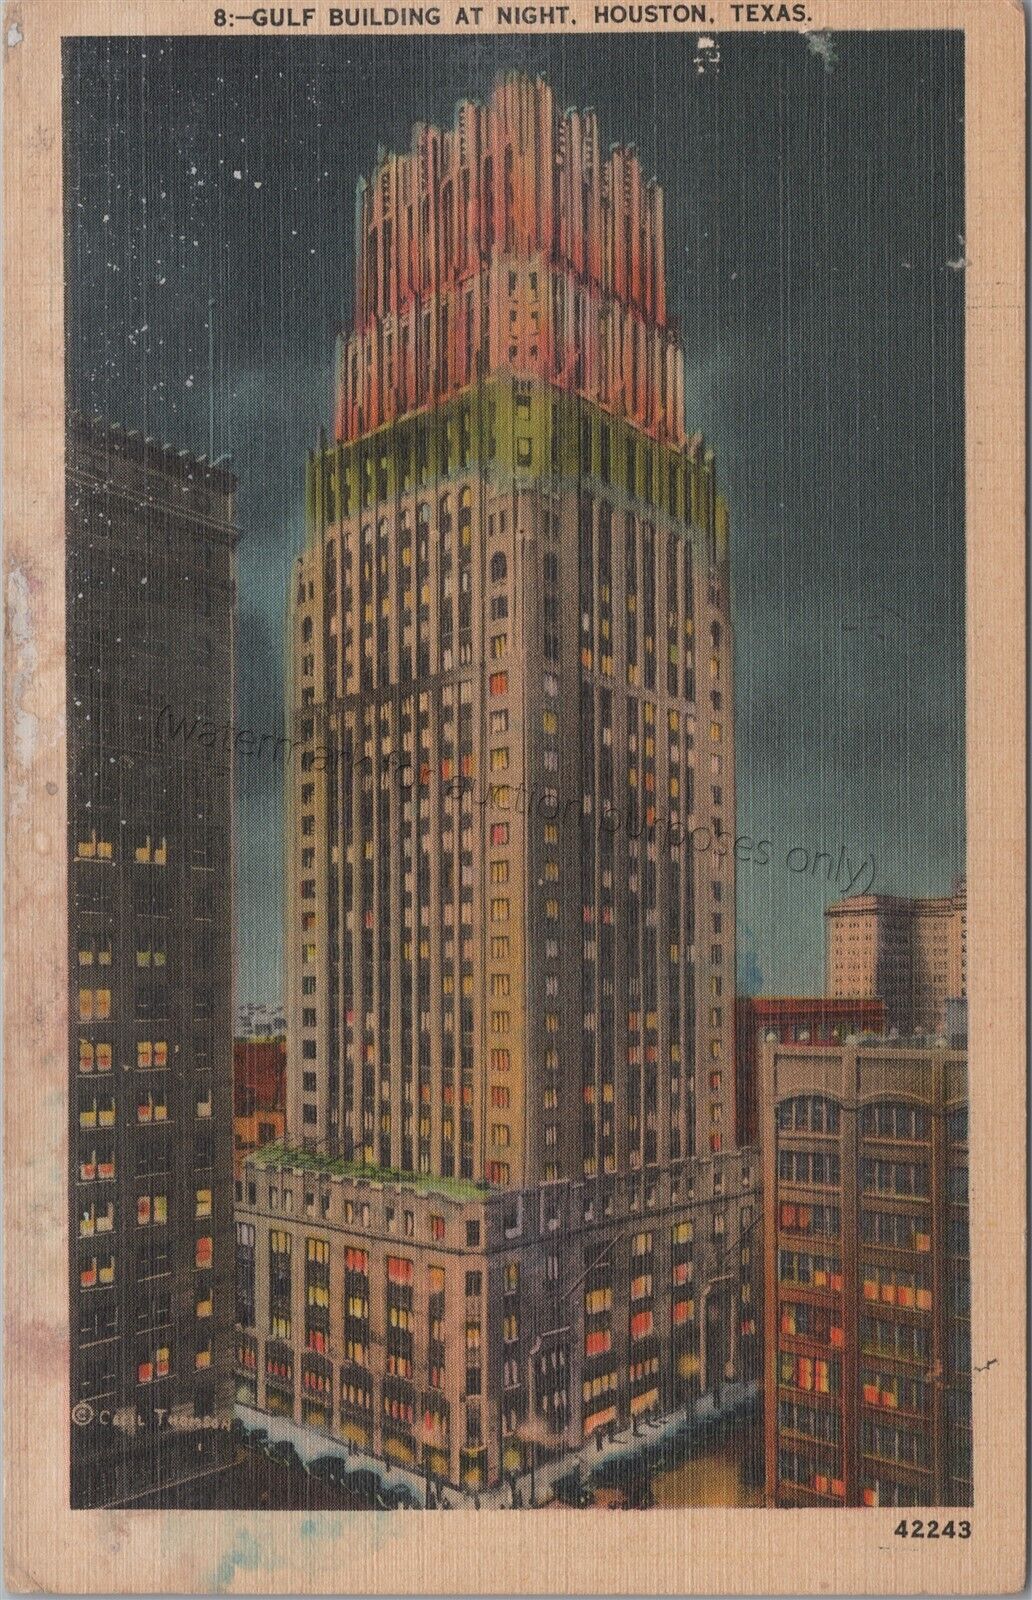 Houston, TX: 1939, Gulf Building at Night - Vintage Texas Postcard